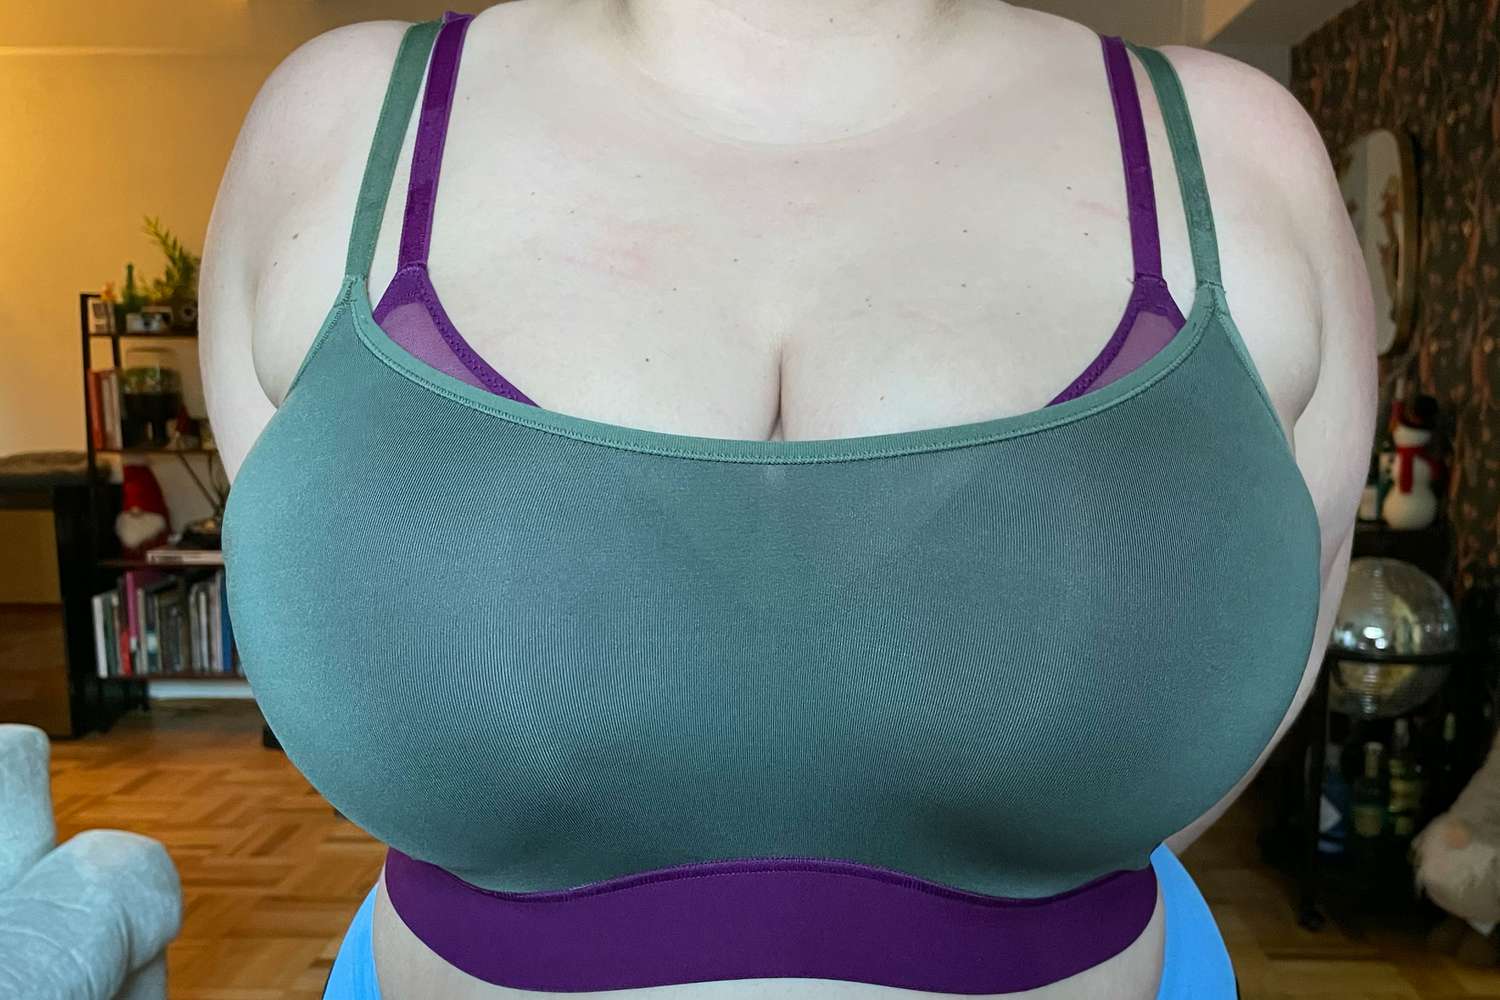 bev mcdaniel recommends big boobs in bras pics pic